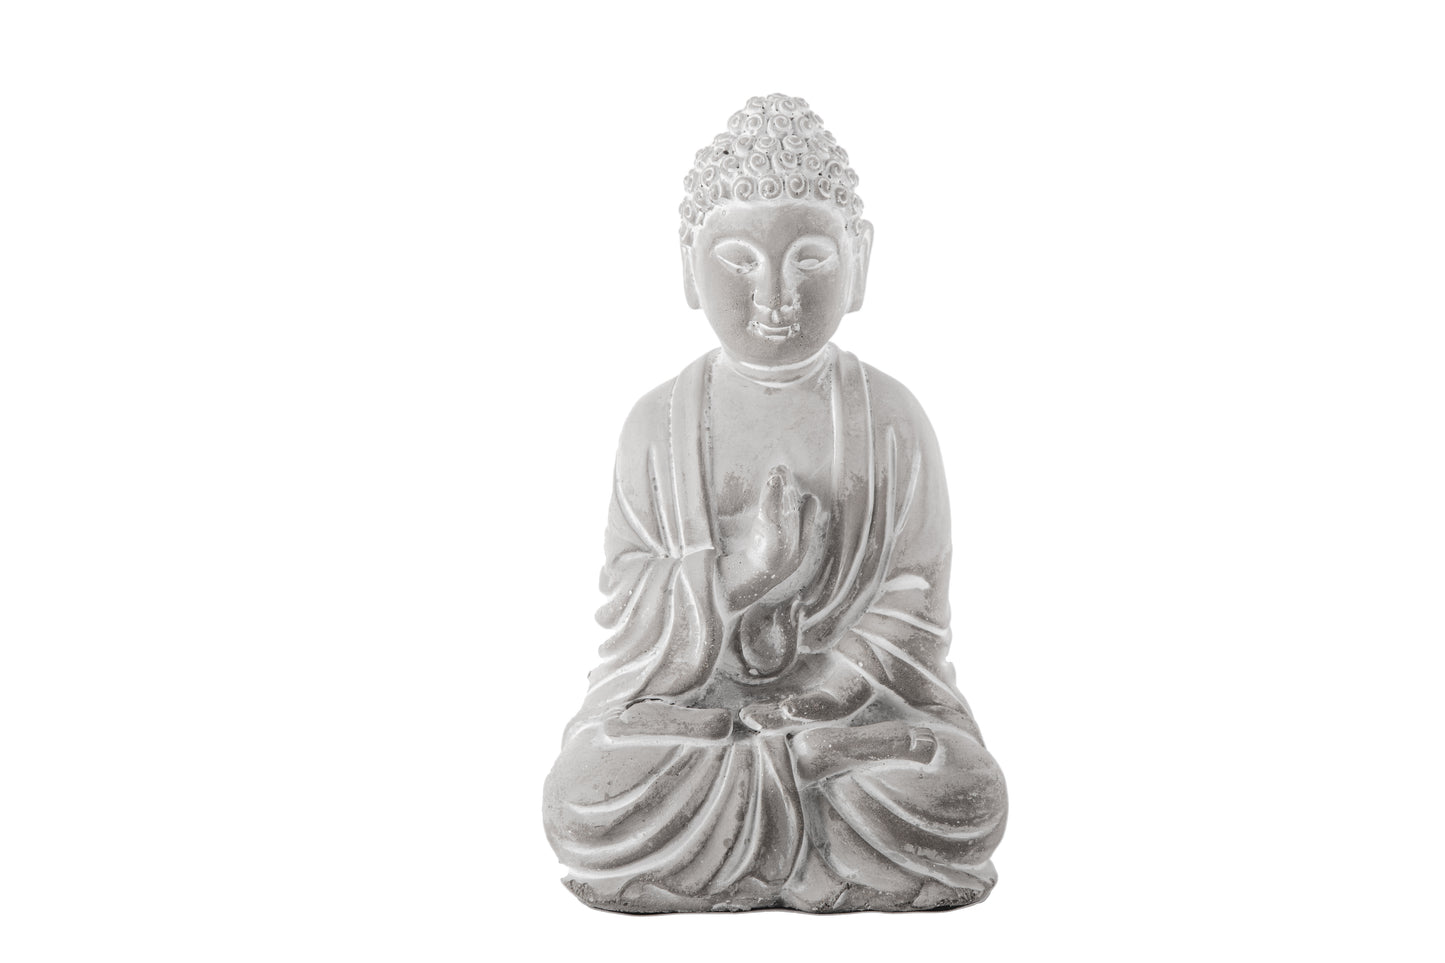 9" Cement Meditating Buddha Figurine in Abhaya Mudra Position